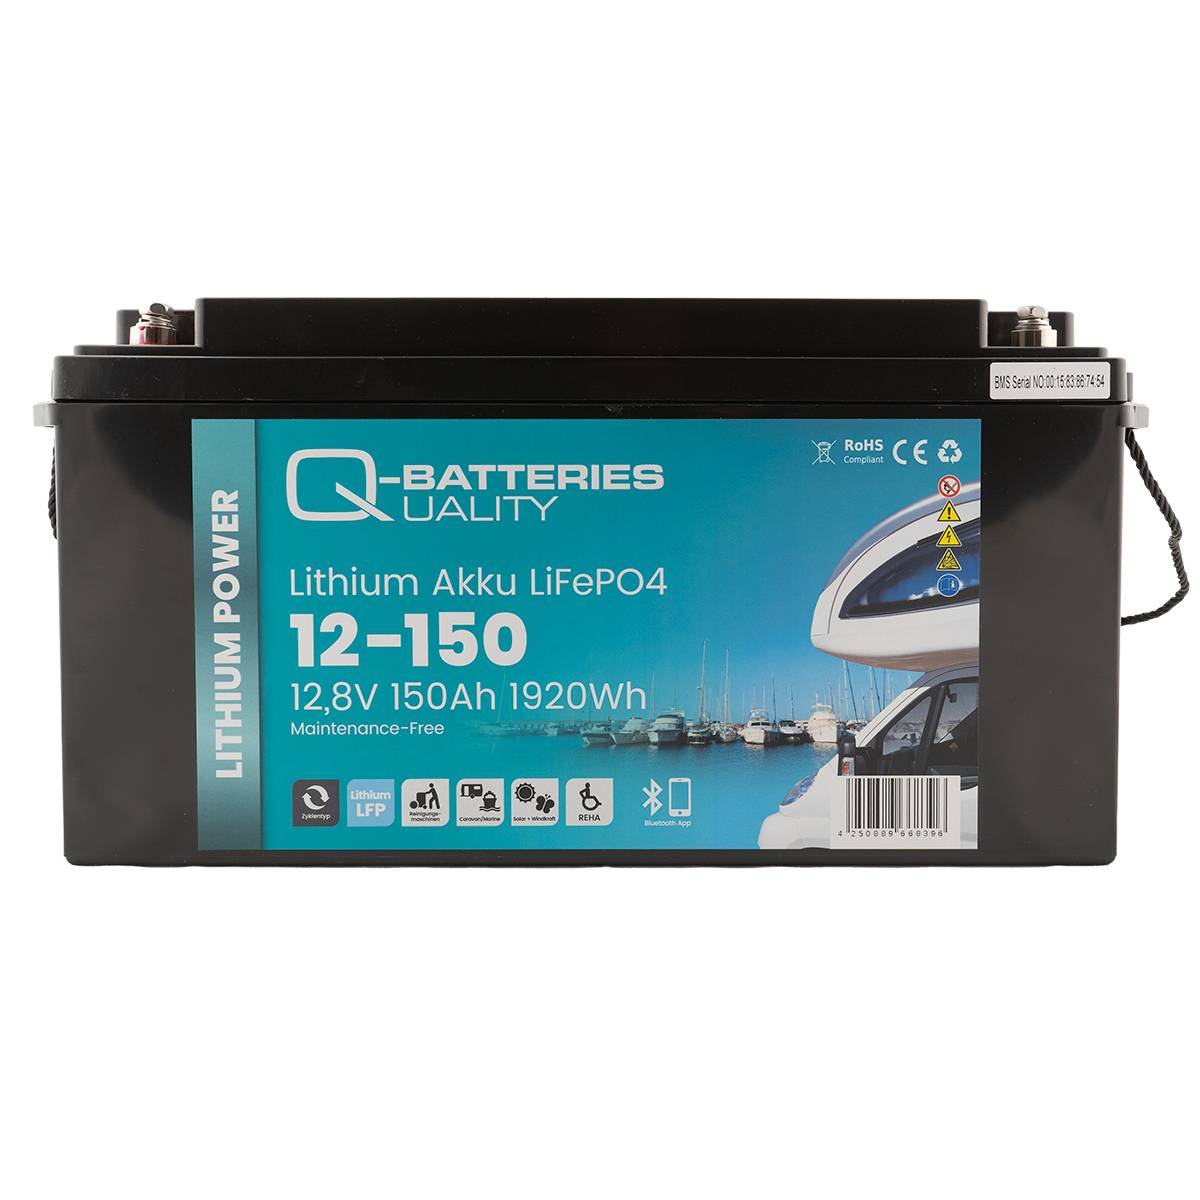 Q-Batteries Lithium Akku 12-150 12,8V 150Ah 1920Wh LiFePO4 Batterie mit Bluetooth